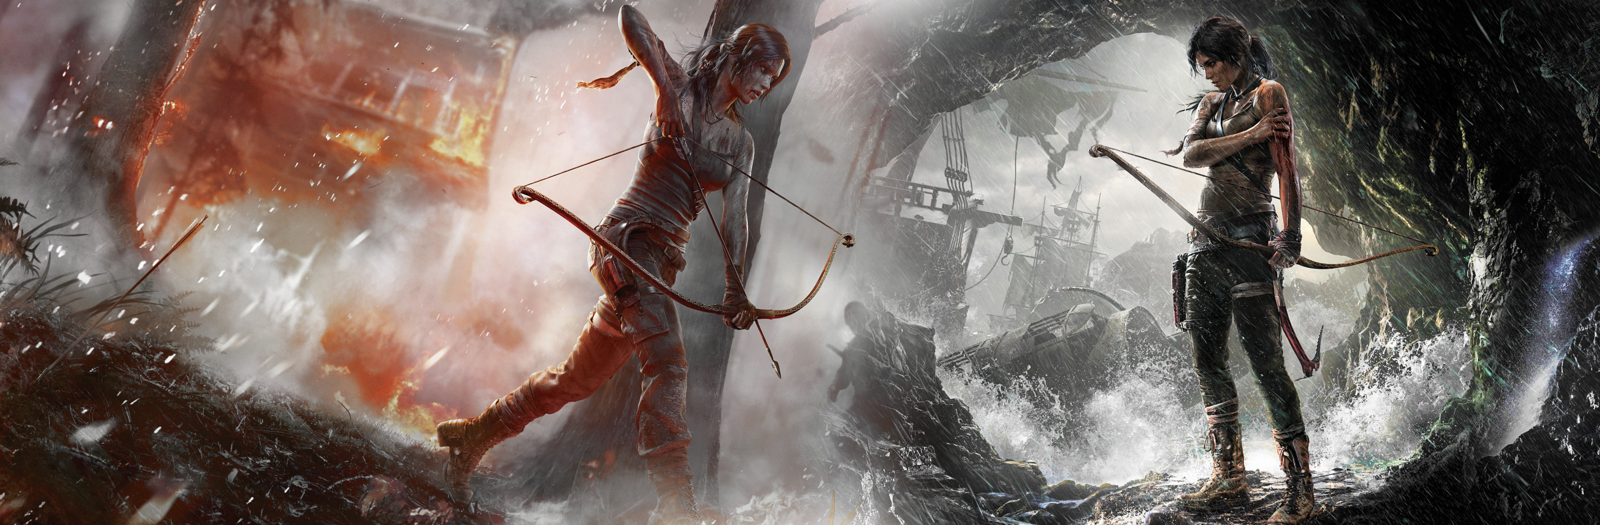 Tomb Raider Dual Screen Wallpaper By Hugotognolo